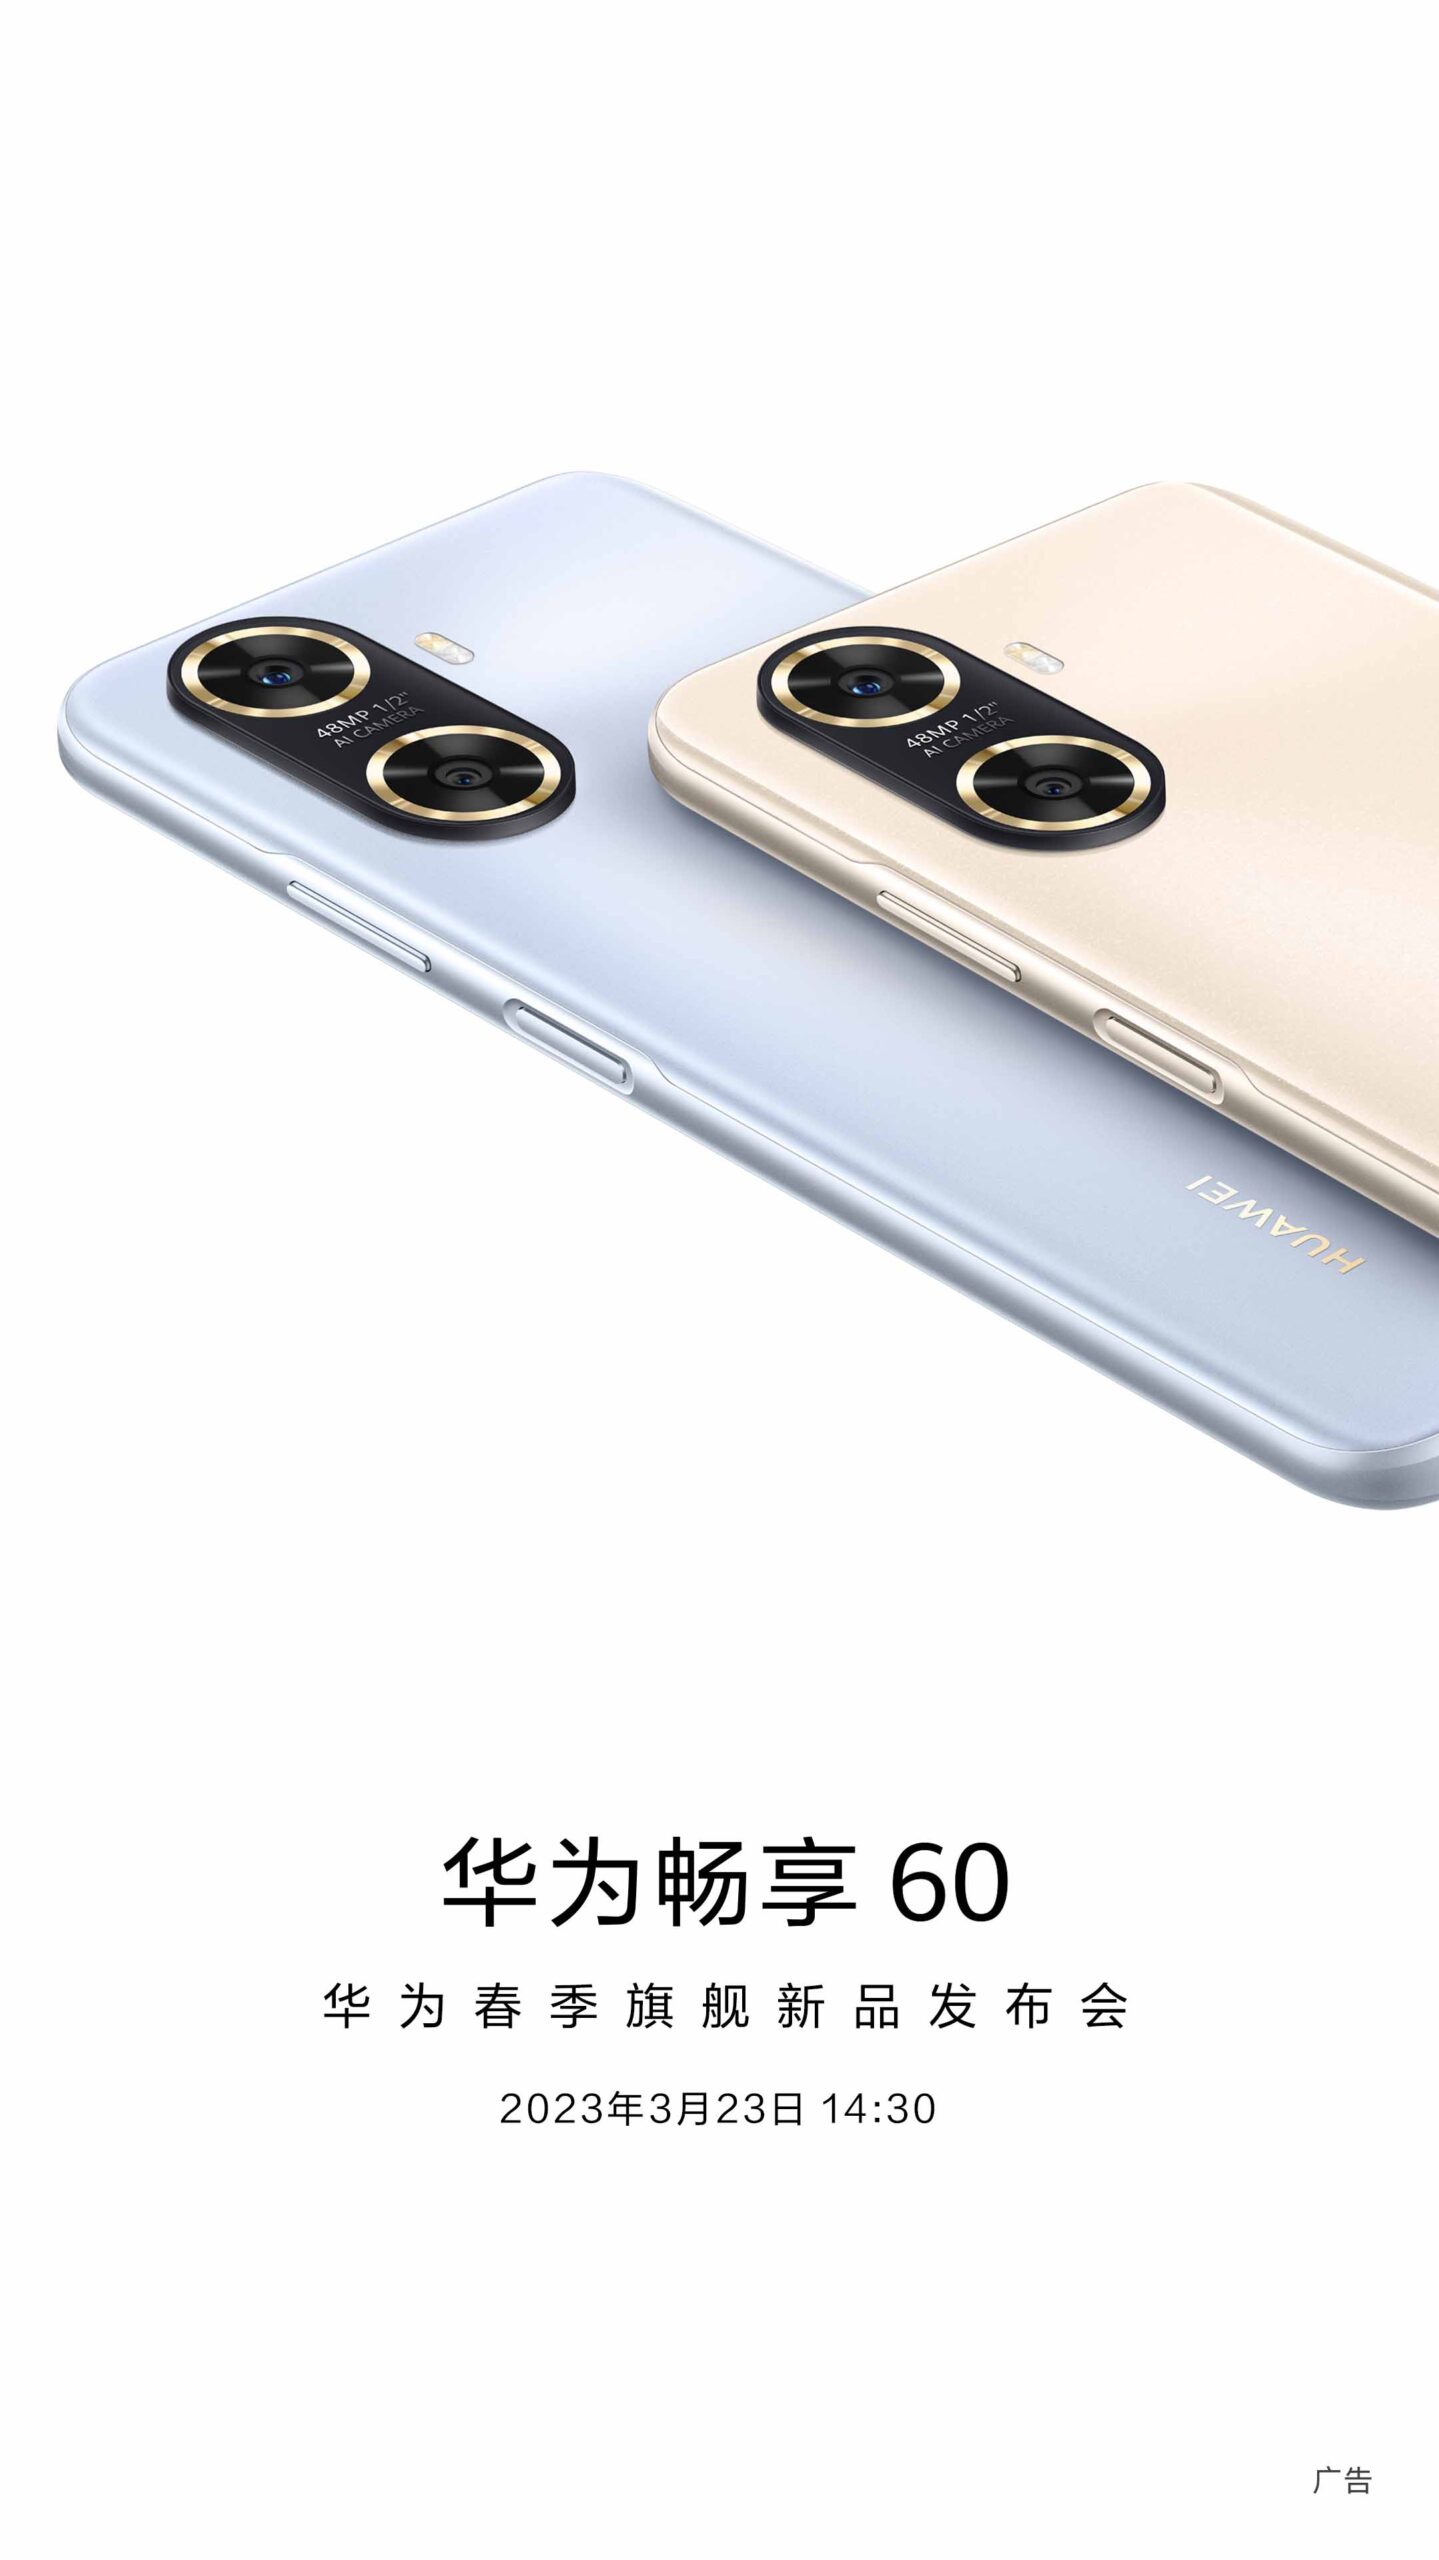 Huawei Enjoy 60 march 23